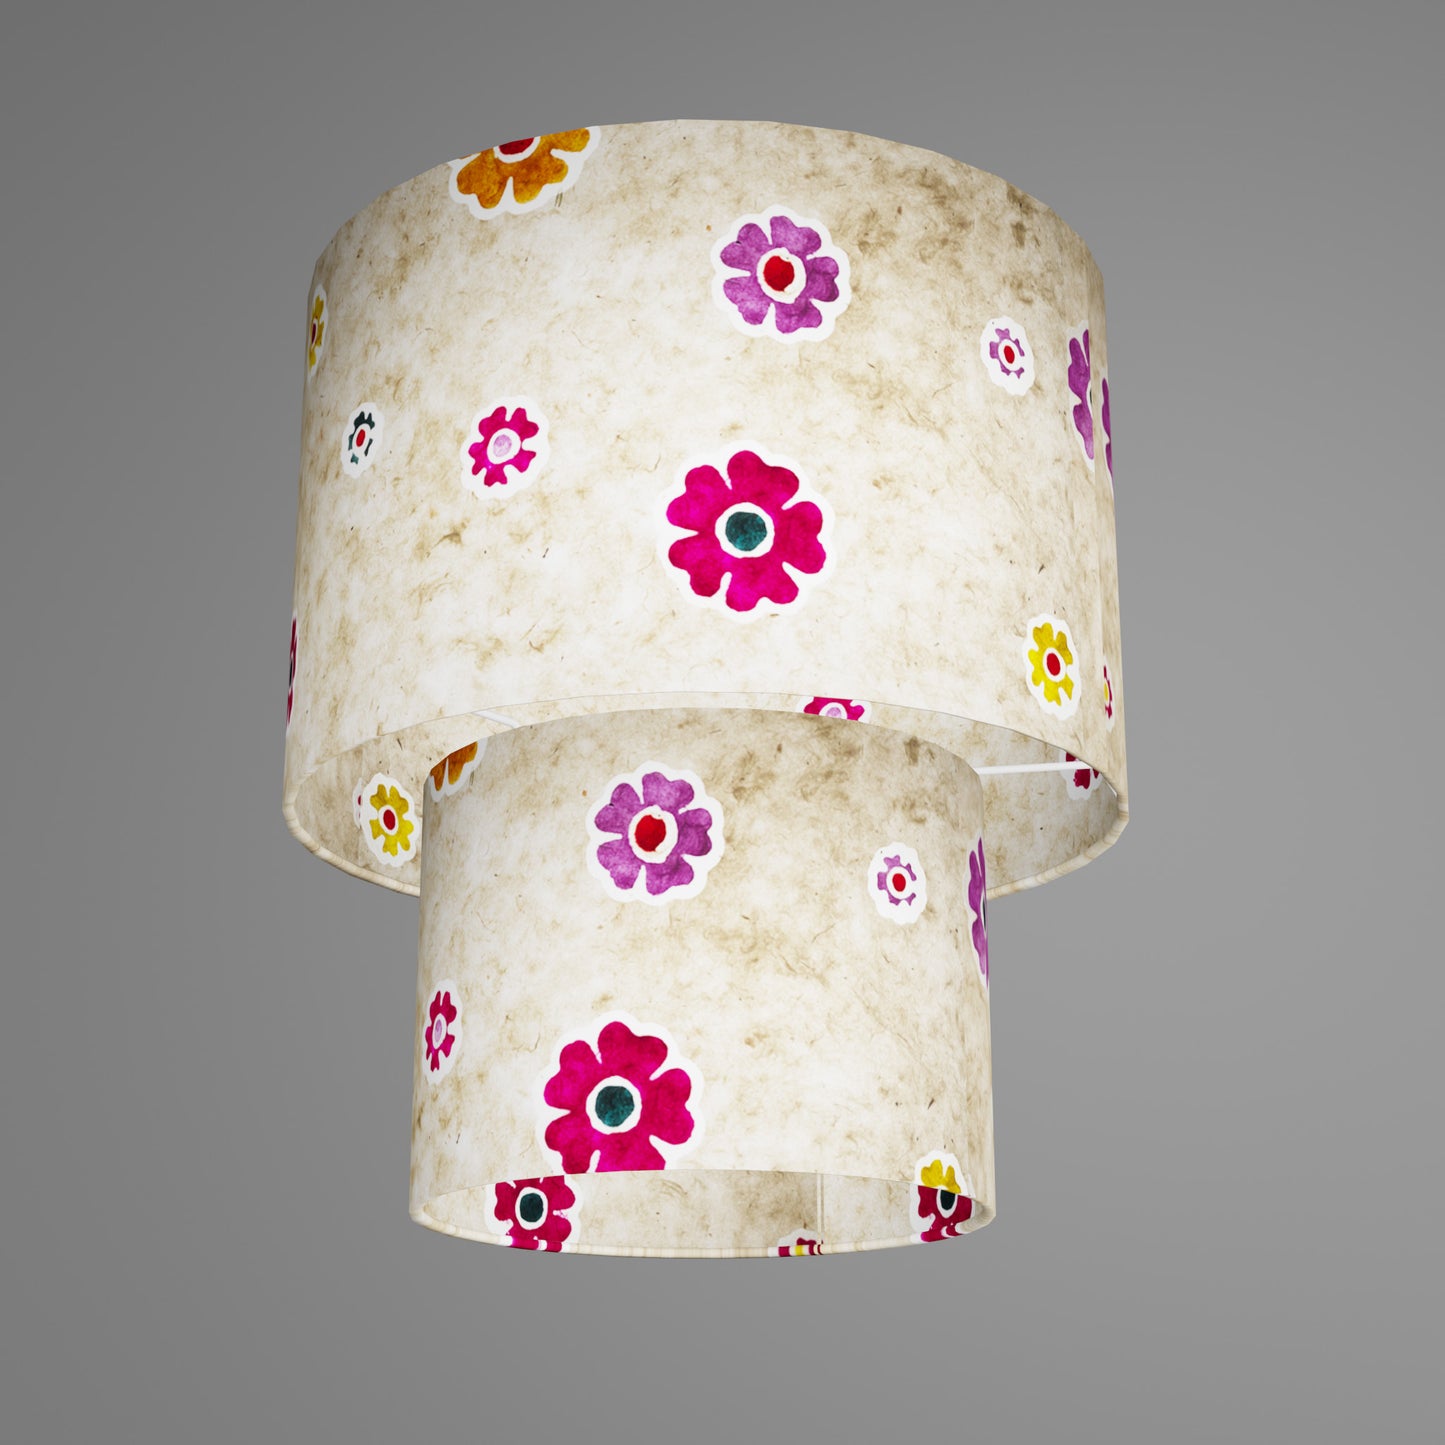 2 Tier Lamp Shade - P35 - Batik Multi Flower on Natural, 30cm x 20cm & 20cm x 15cm